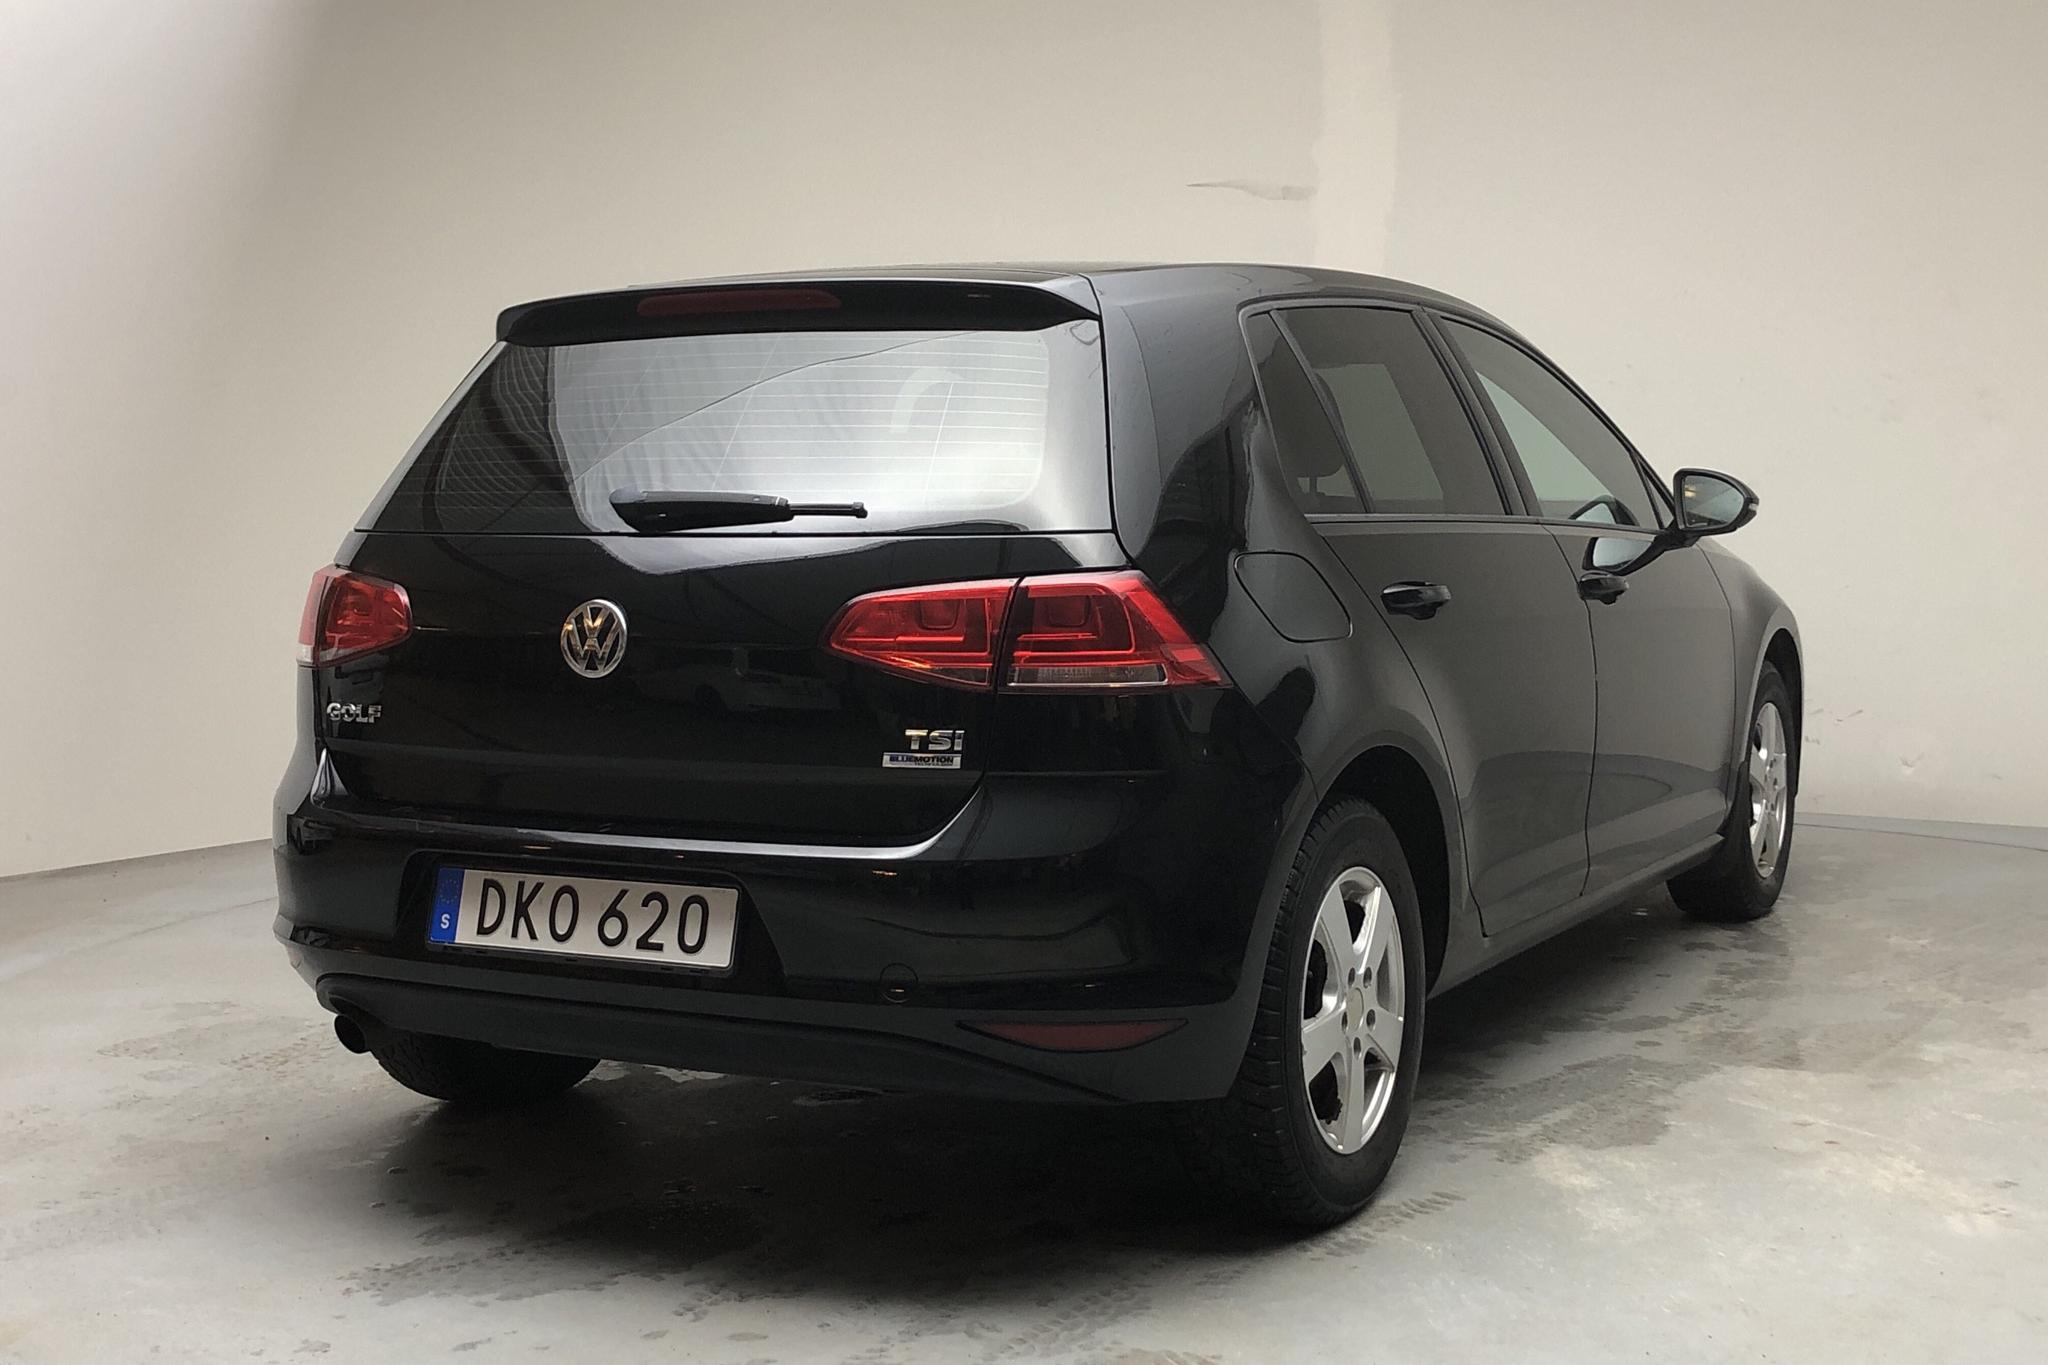 VW Golf VII 1.2 TSI 5dr (105hk) - 144 330 km - Manual - black - 2015